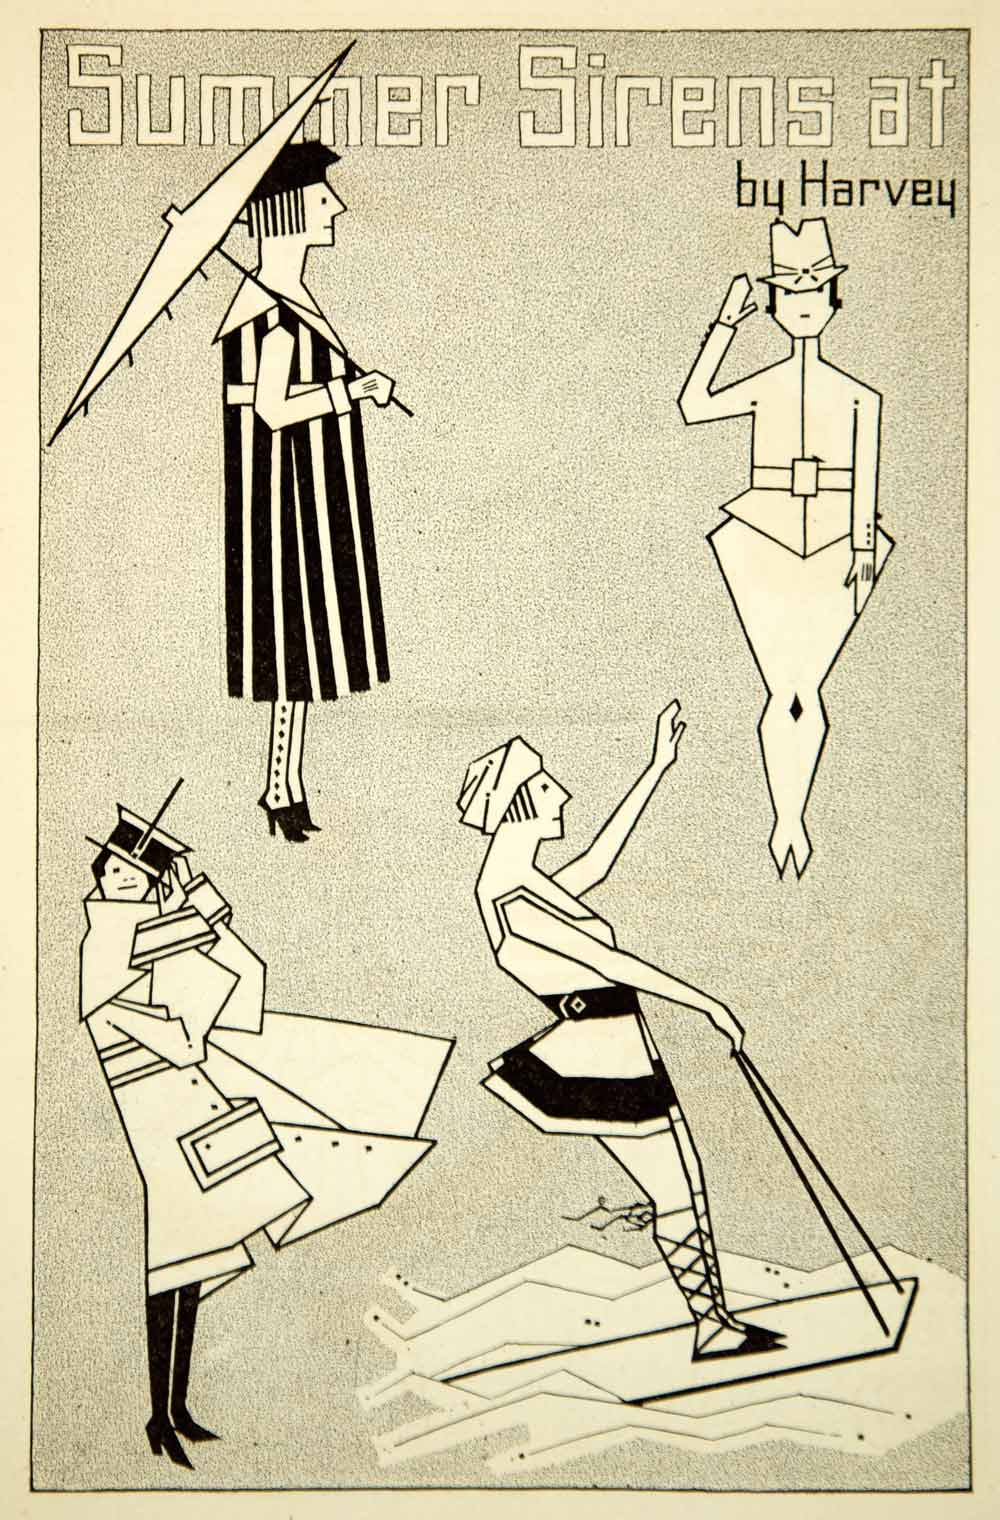 1917 Print Harvey Peake Cartoon Art Caricature Women Beach Fashion World War I